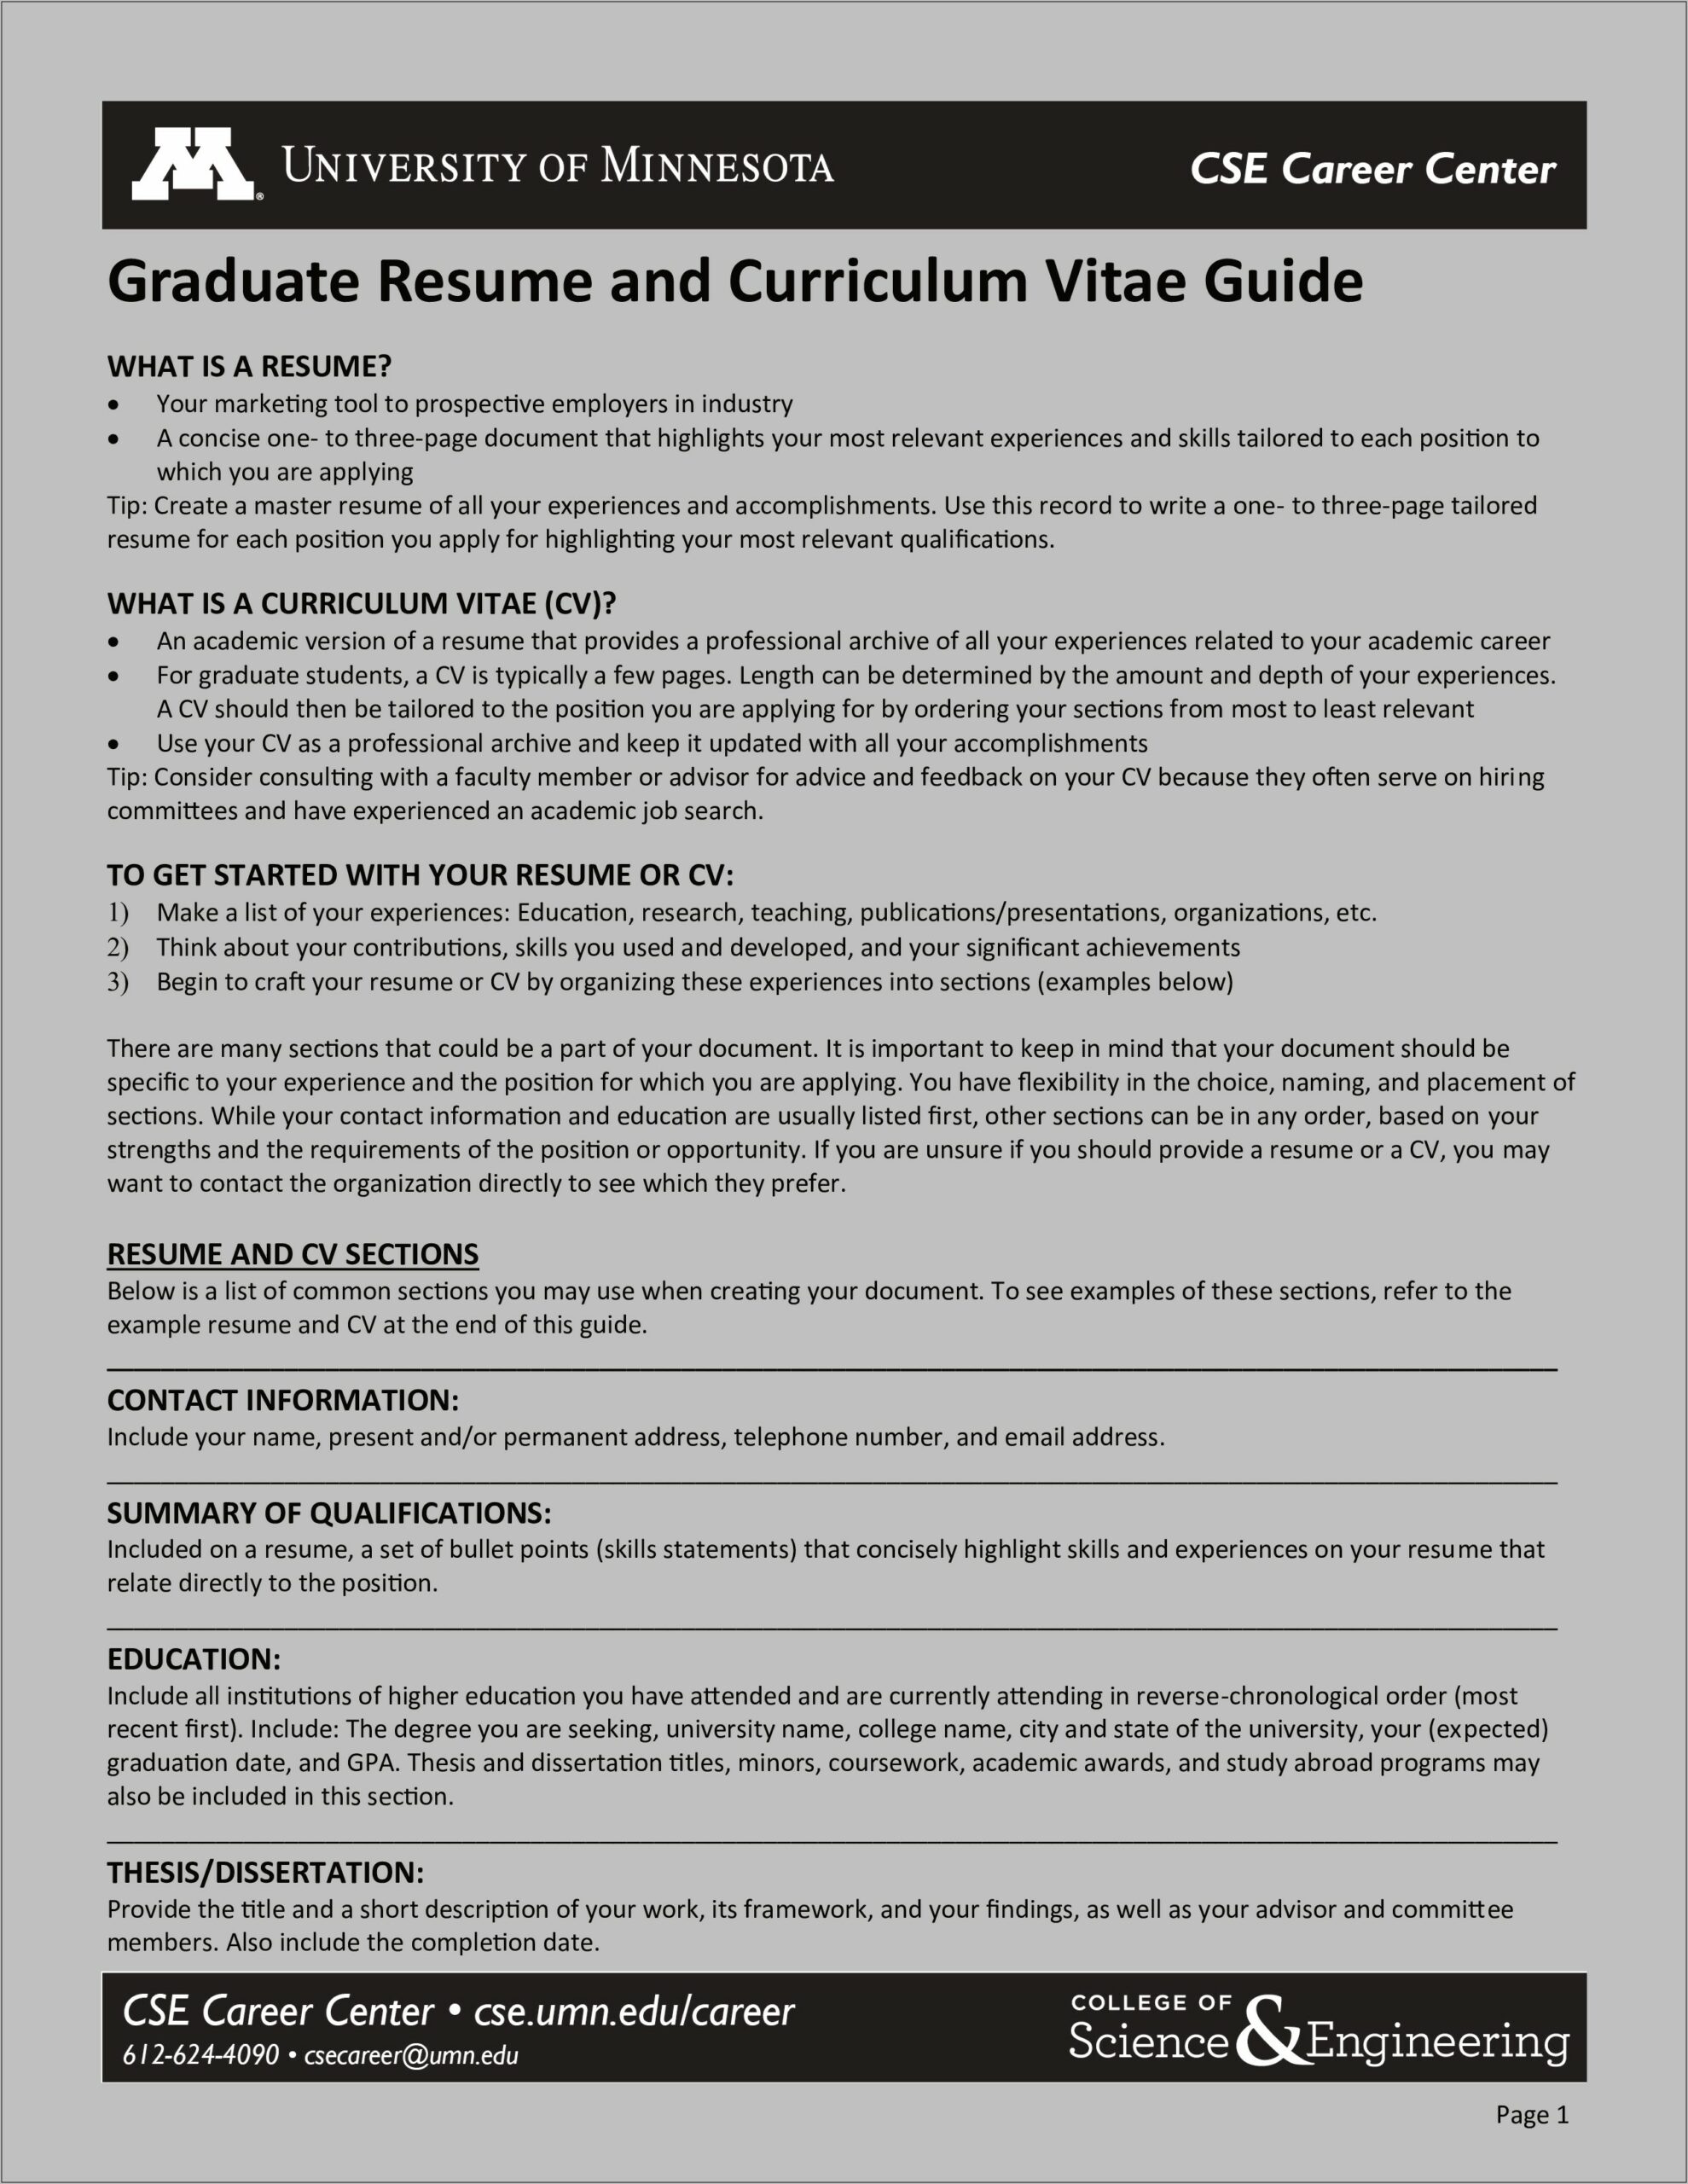 Resume Summary For Recent College Graduate